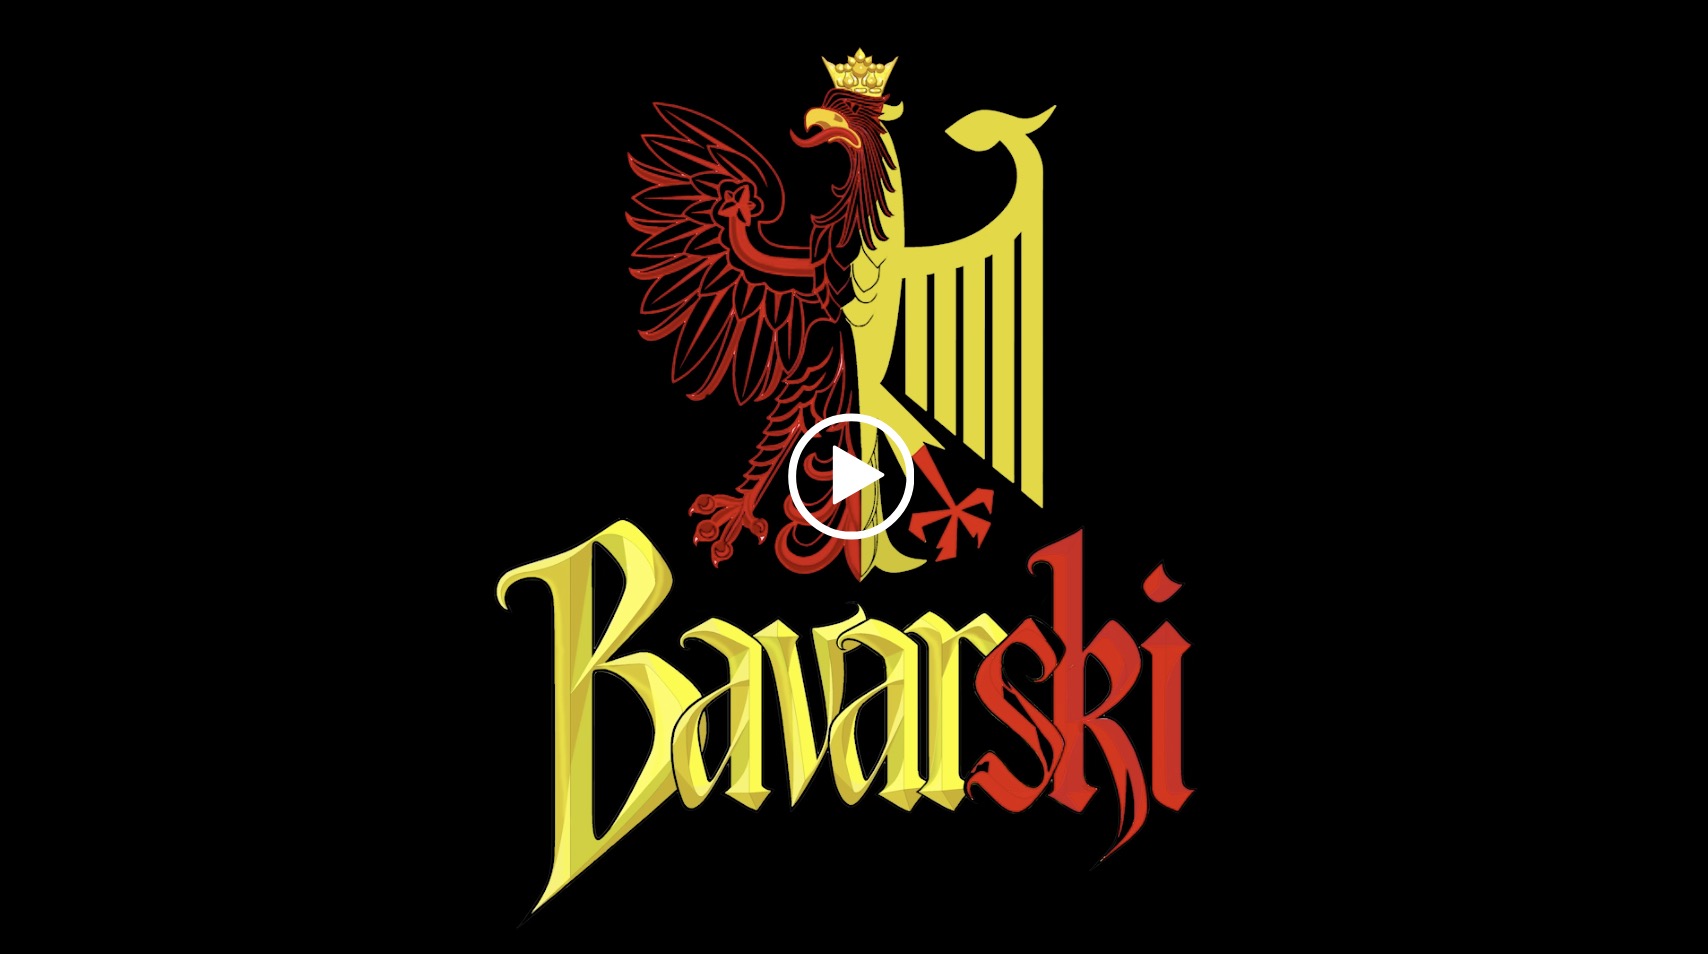 Bavarski – Coming to an Oktoberfest near you!